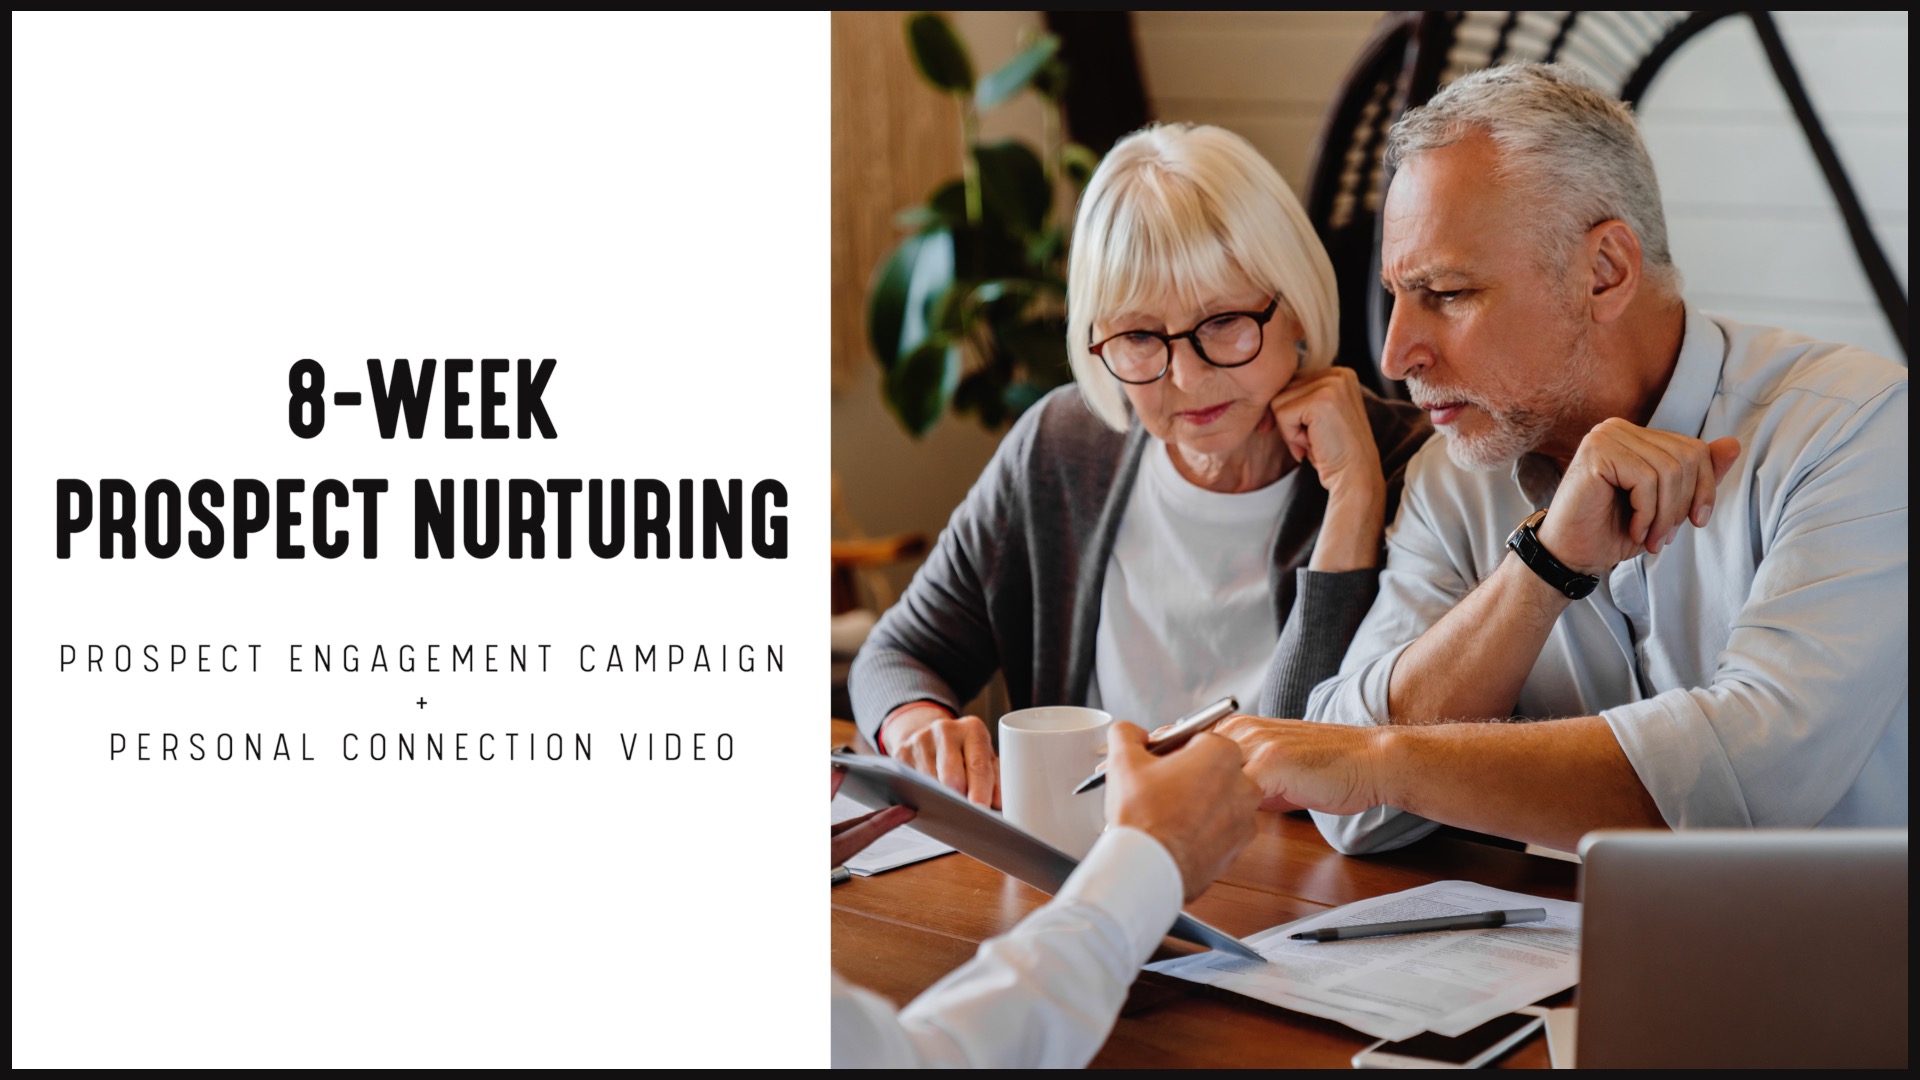 [NEW] Prospect Engagement Campaign | 8-Week Prospect Nurturing